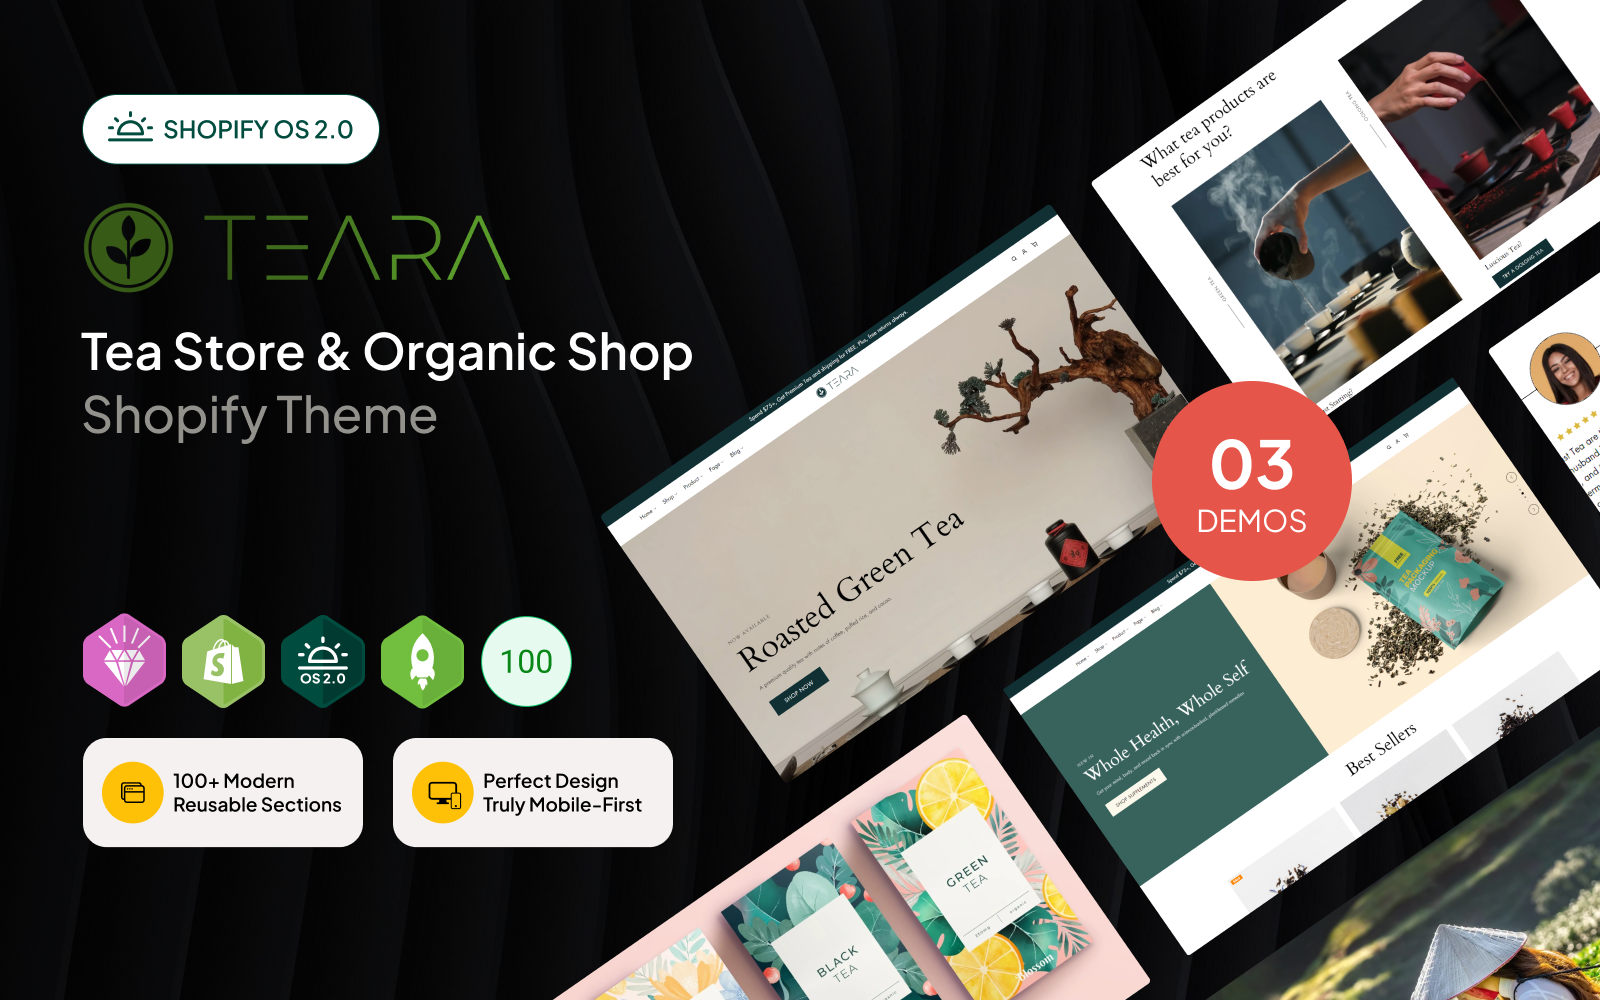 Teara - Tea Store & Organic Shop Shopify Theme OS 2.0